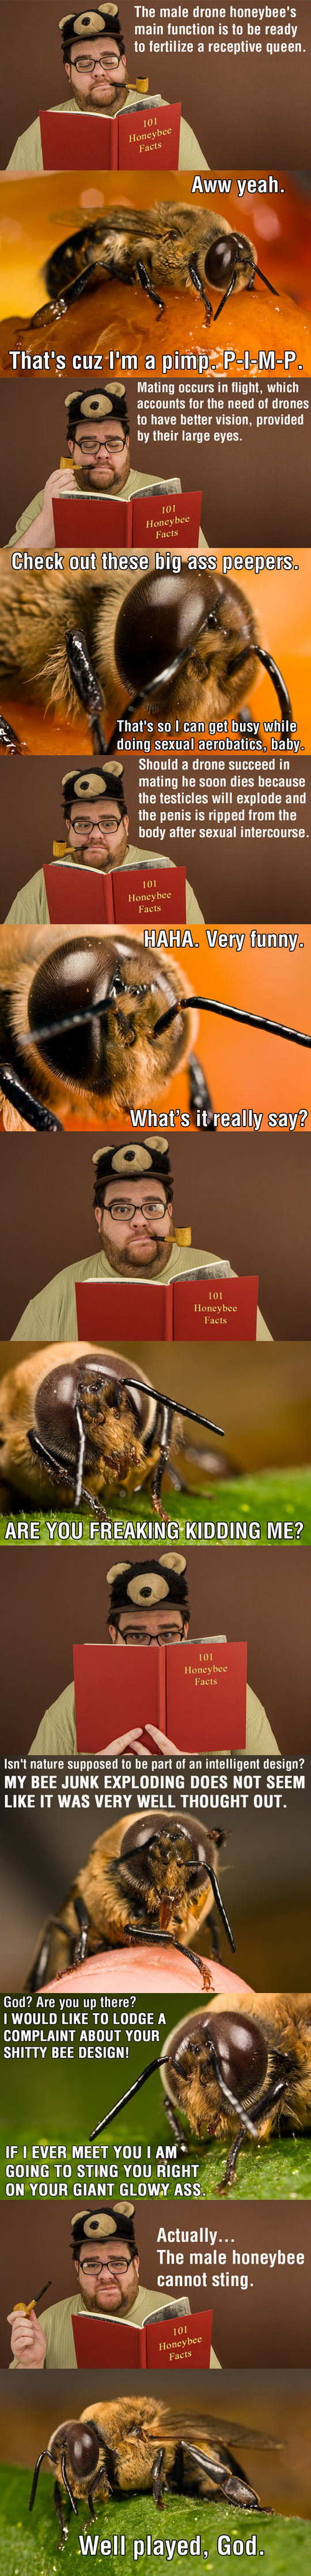 Honey Bee Facts